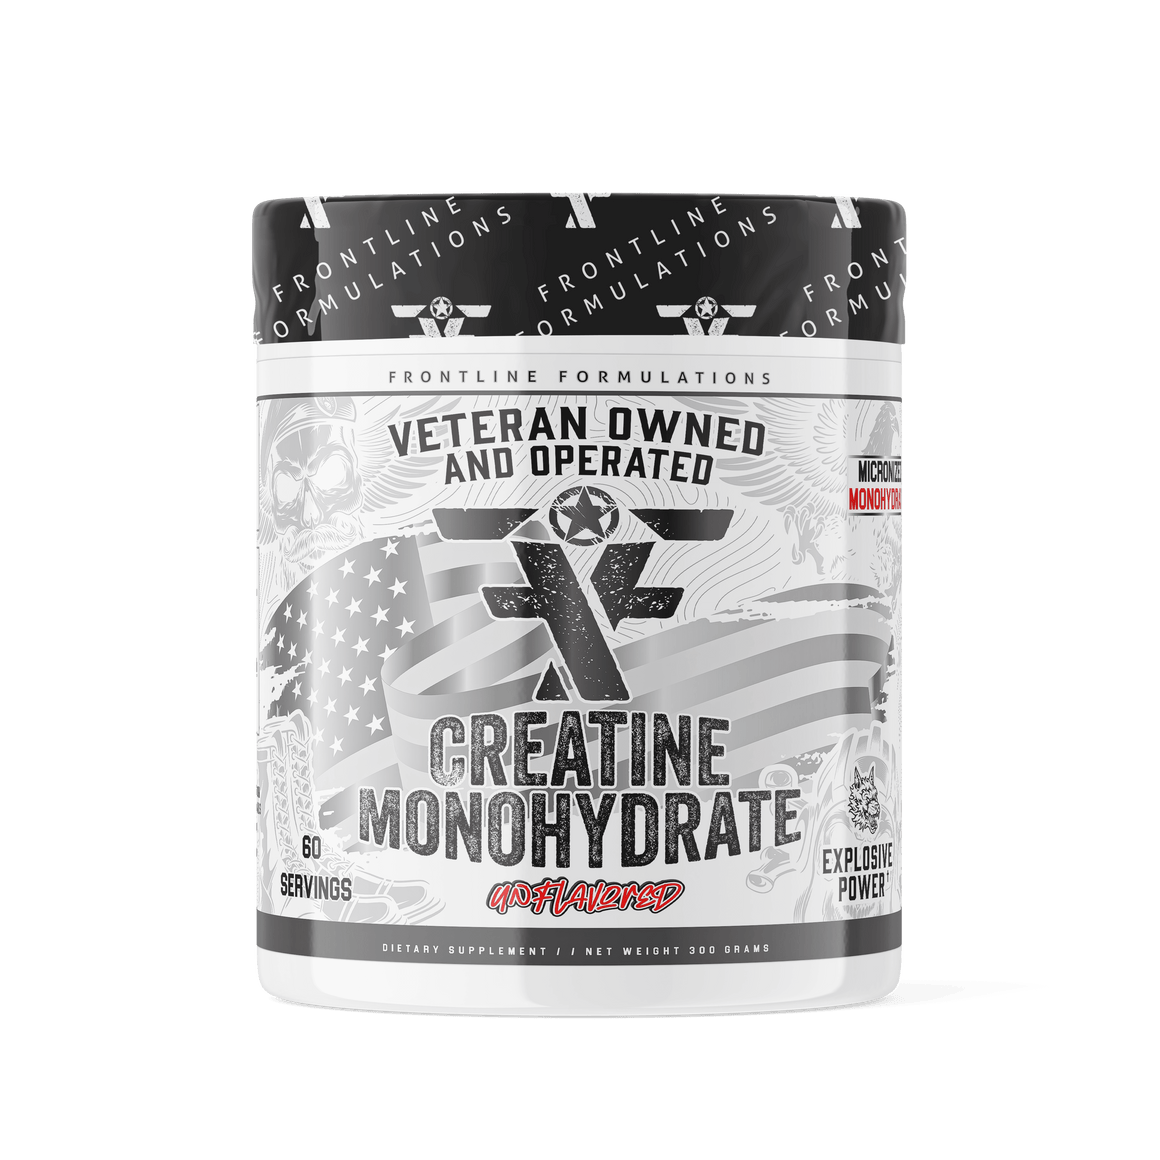 Frontline Formulations Creatine Monohydrate